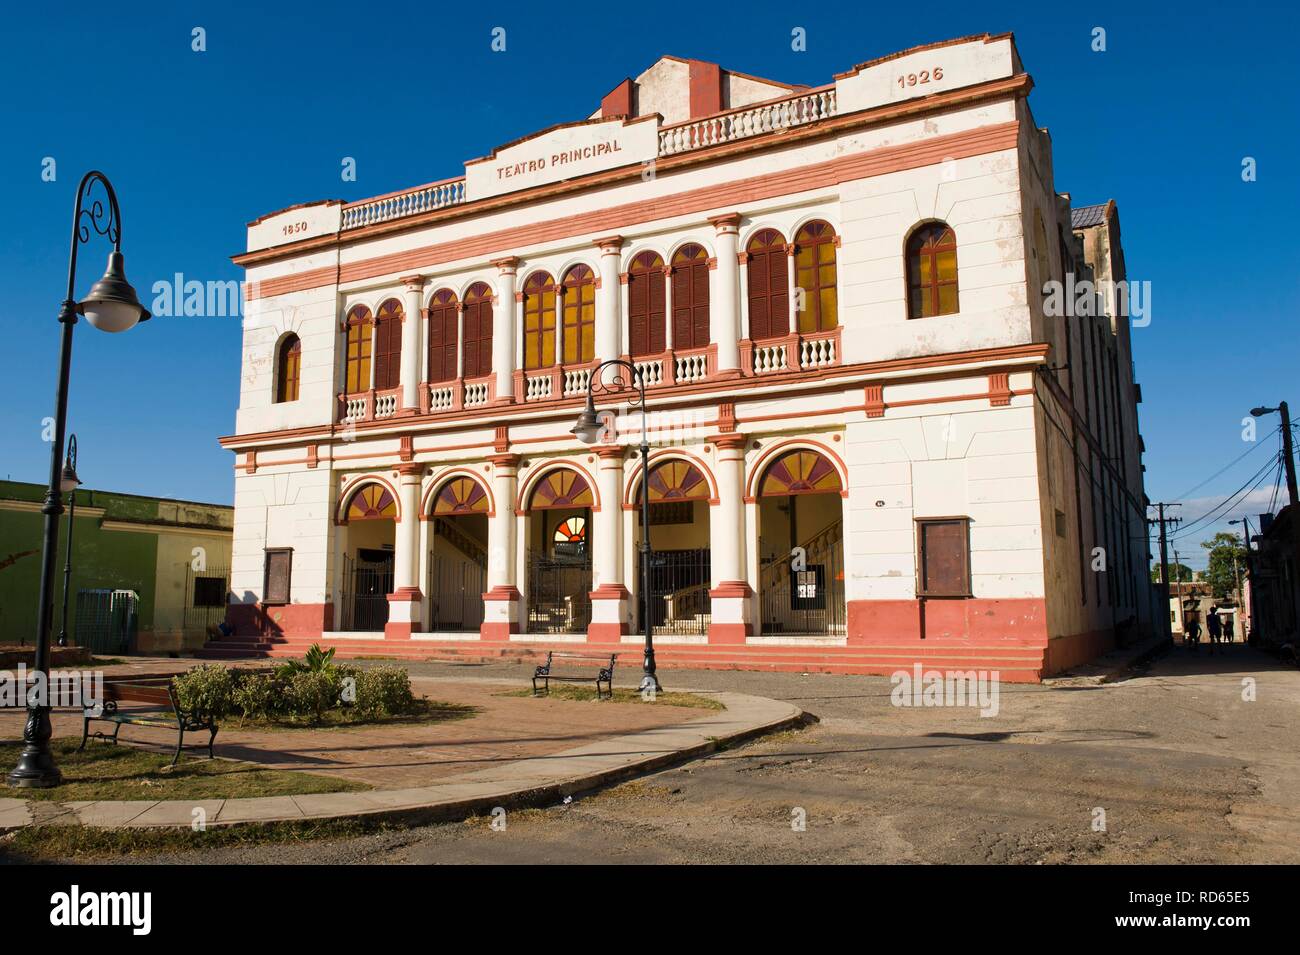 Teatro Principal theatre, Camaguey, Camagueey, Unesco World Heritage Site, Cuba Stock Photo